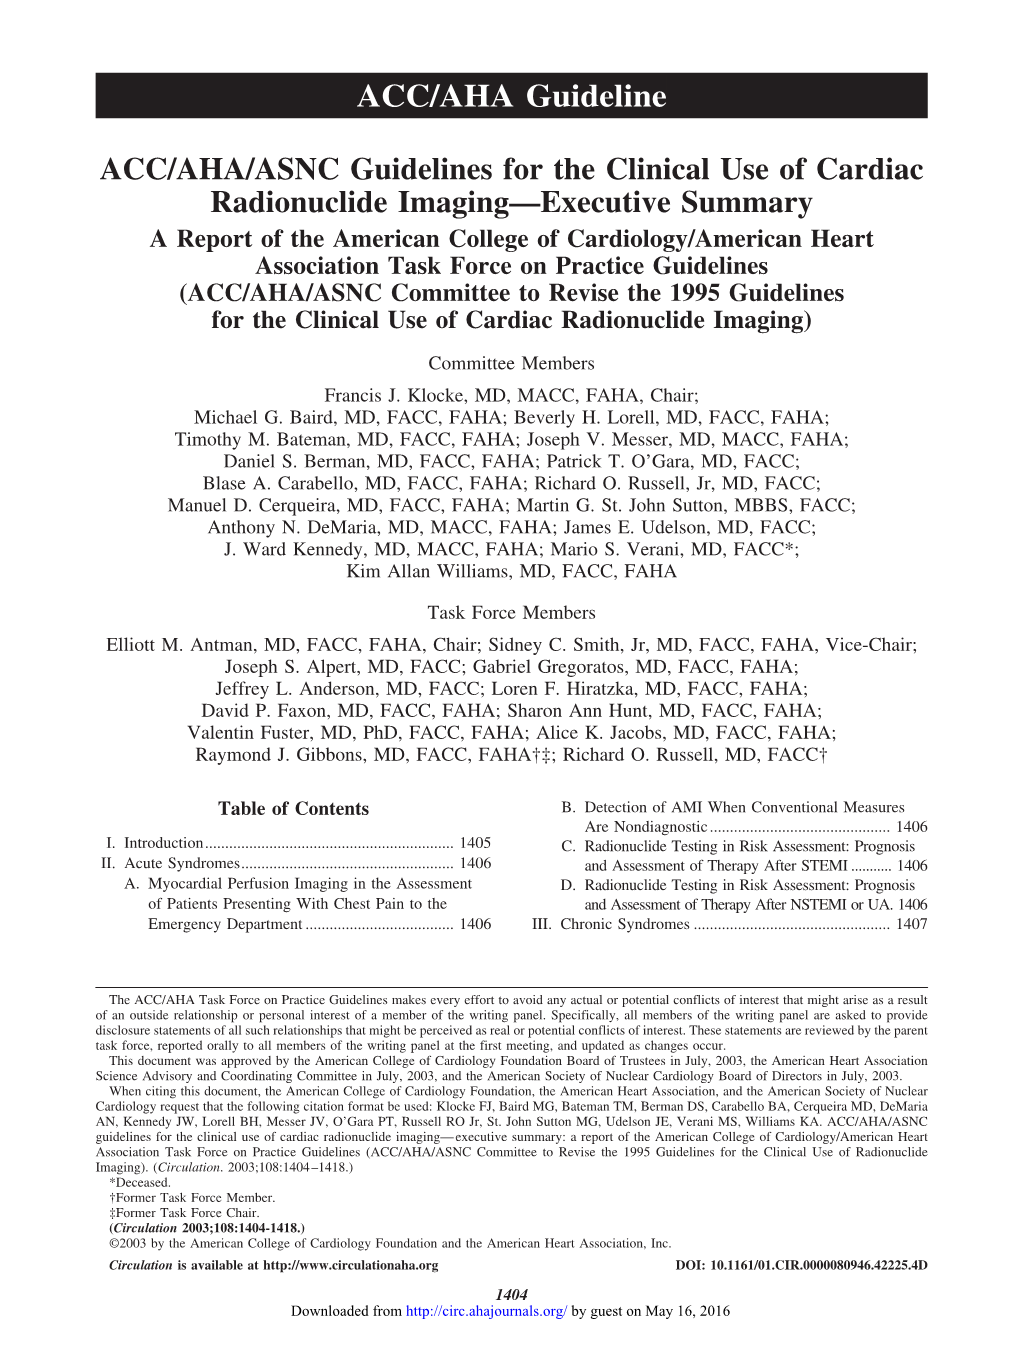 ACC/AHA/ASNC Guidelines for the Clinical Use of Cardiac Radionuclide Imaging—Executive Summary